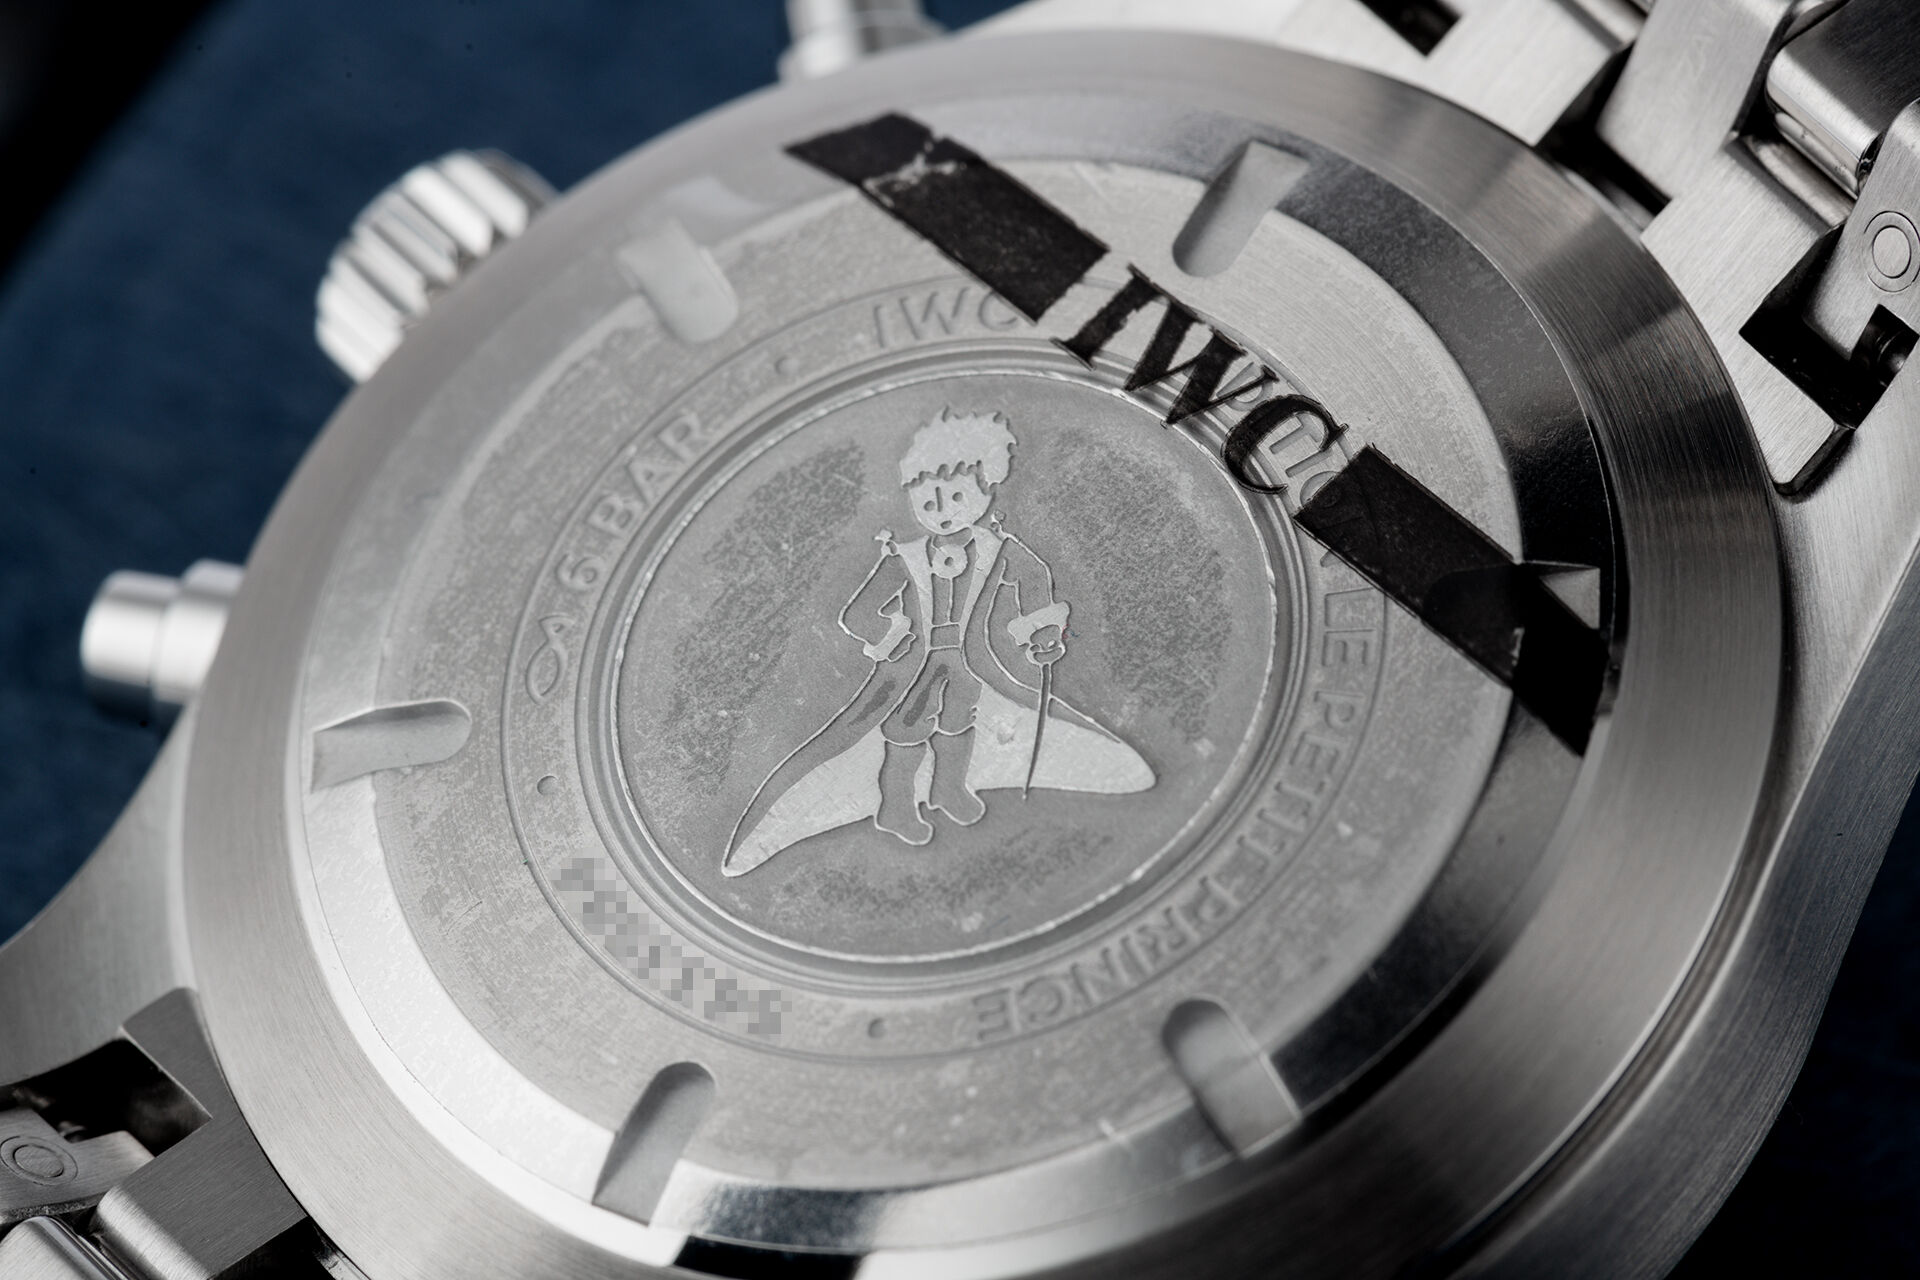 ref IW377714 | 43mm, Box & Certificate | IWC Pilot's Watch Chronograph